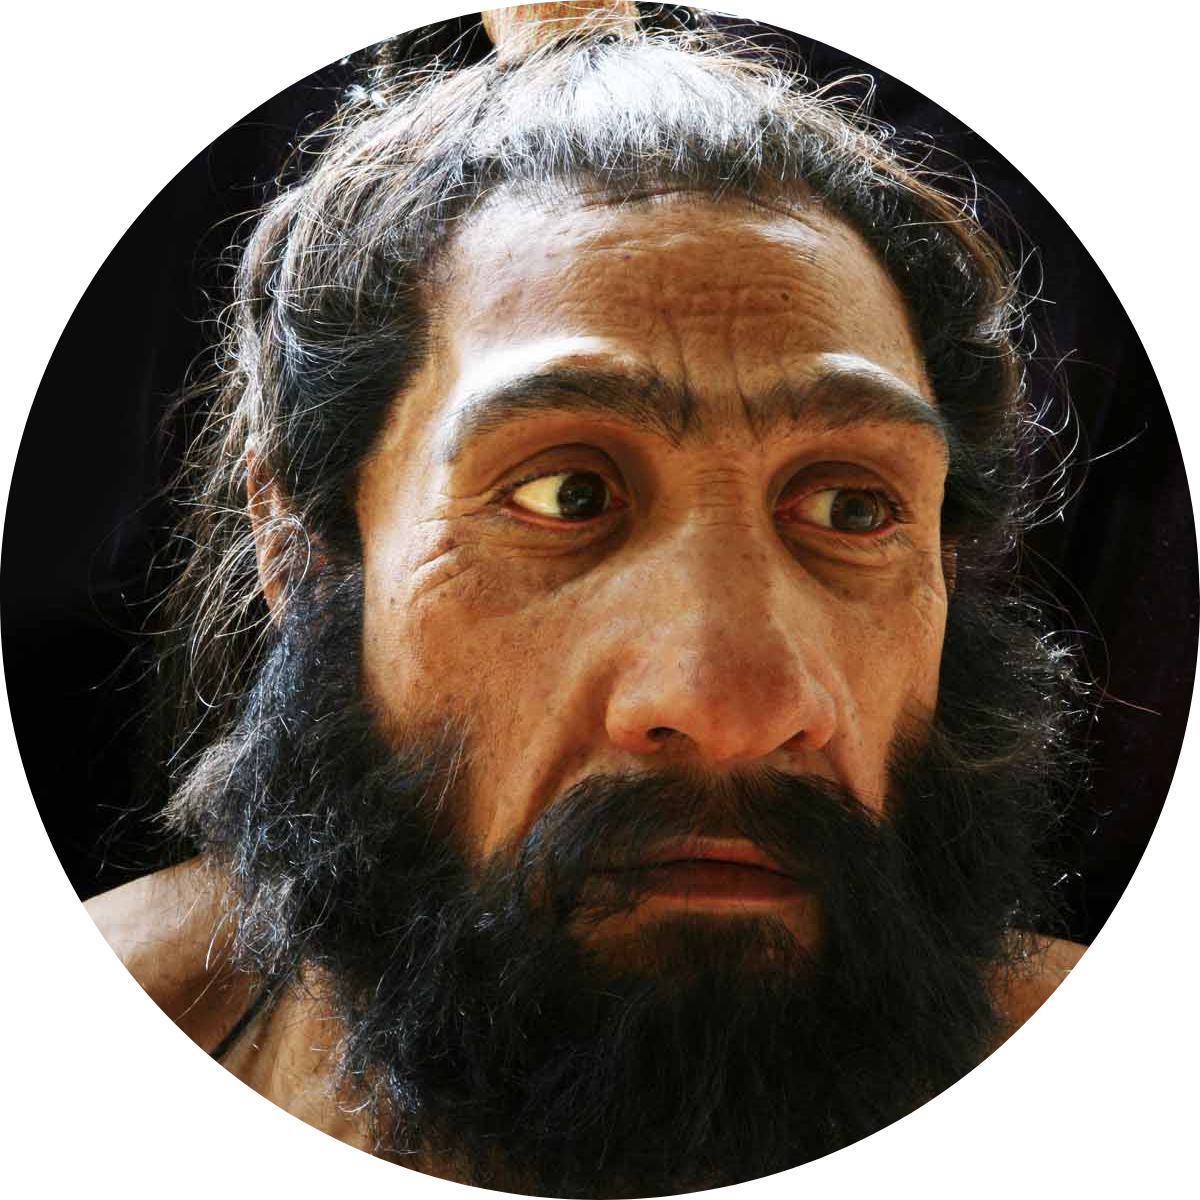 Neanderthal